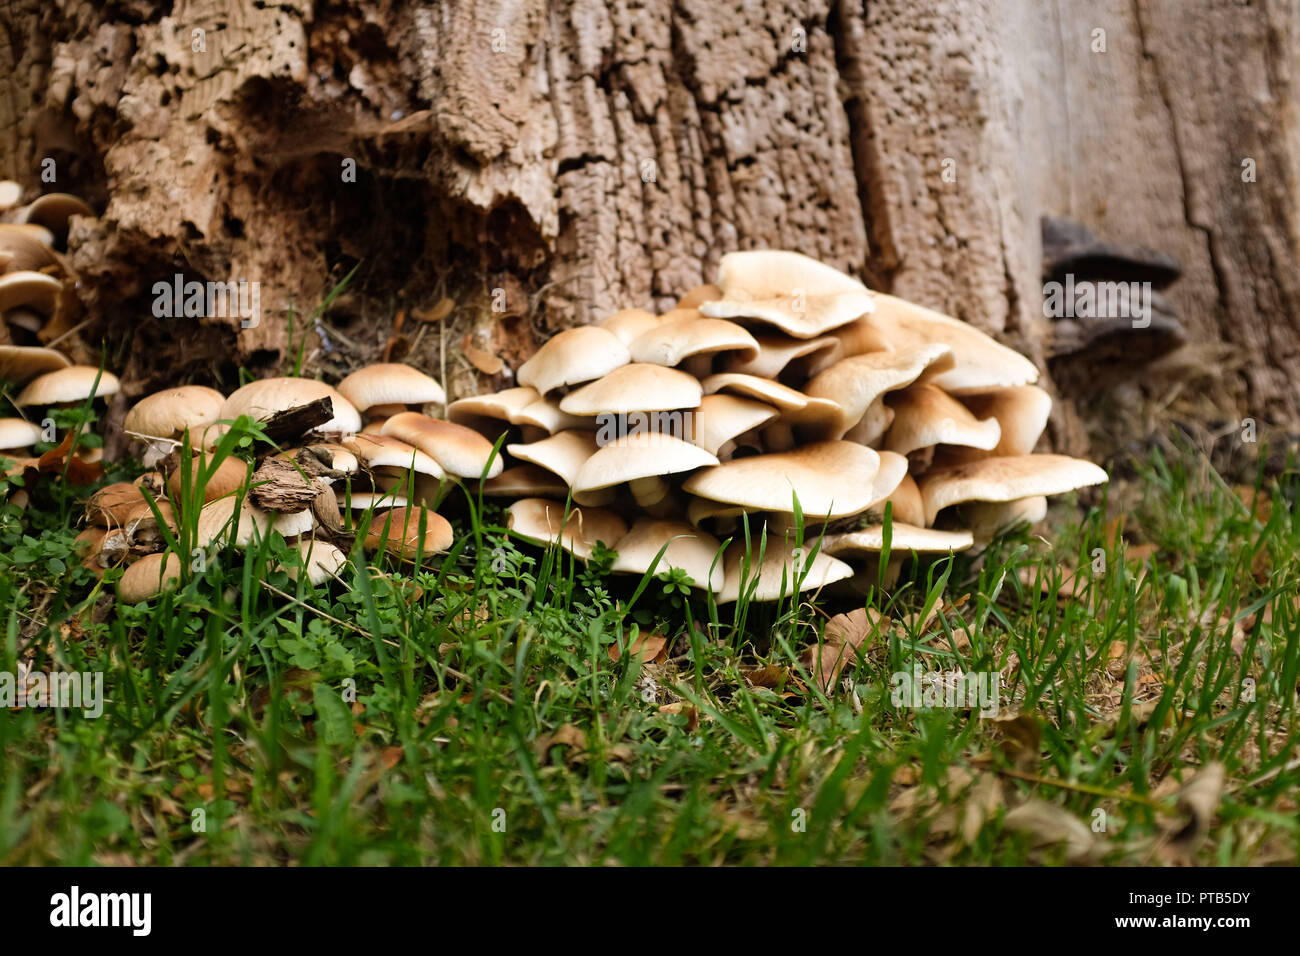 Wild mushrooms fungi growing on an old dead tree Stock Photo